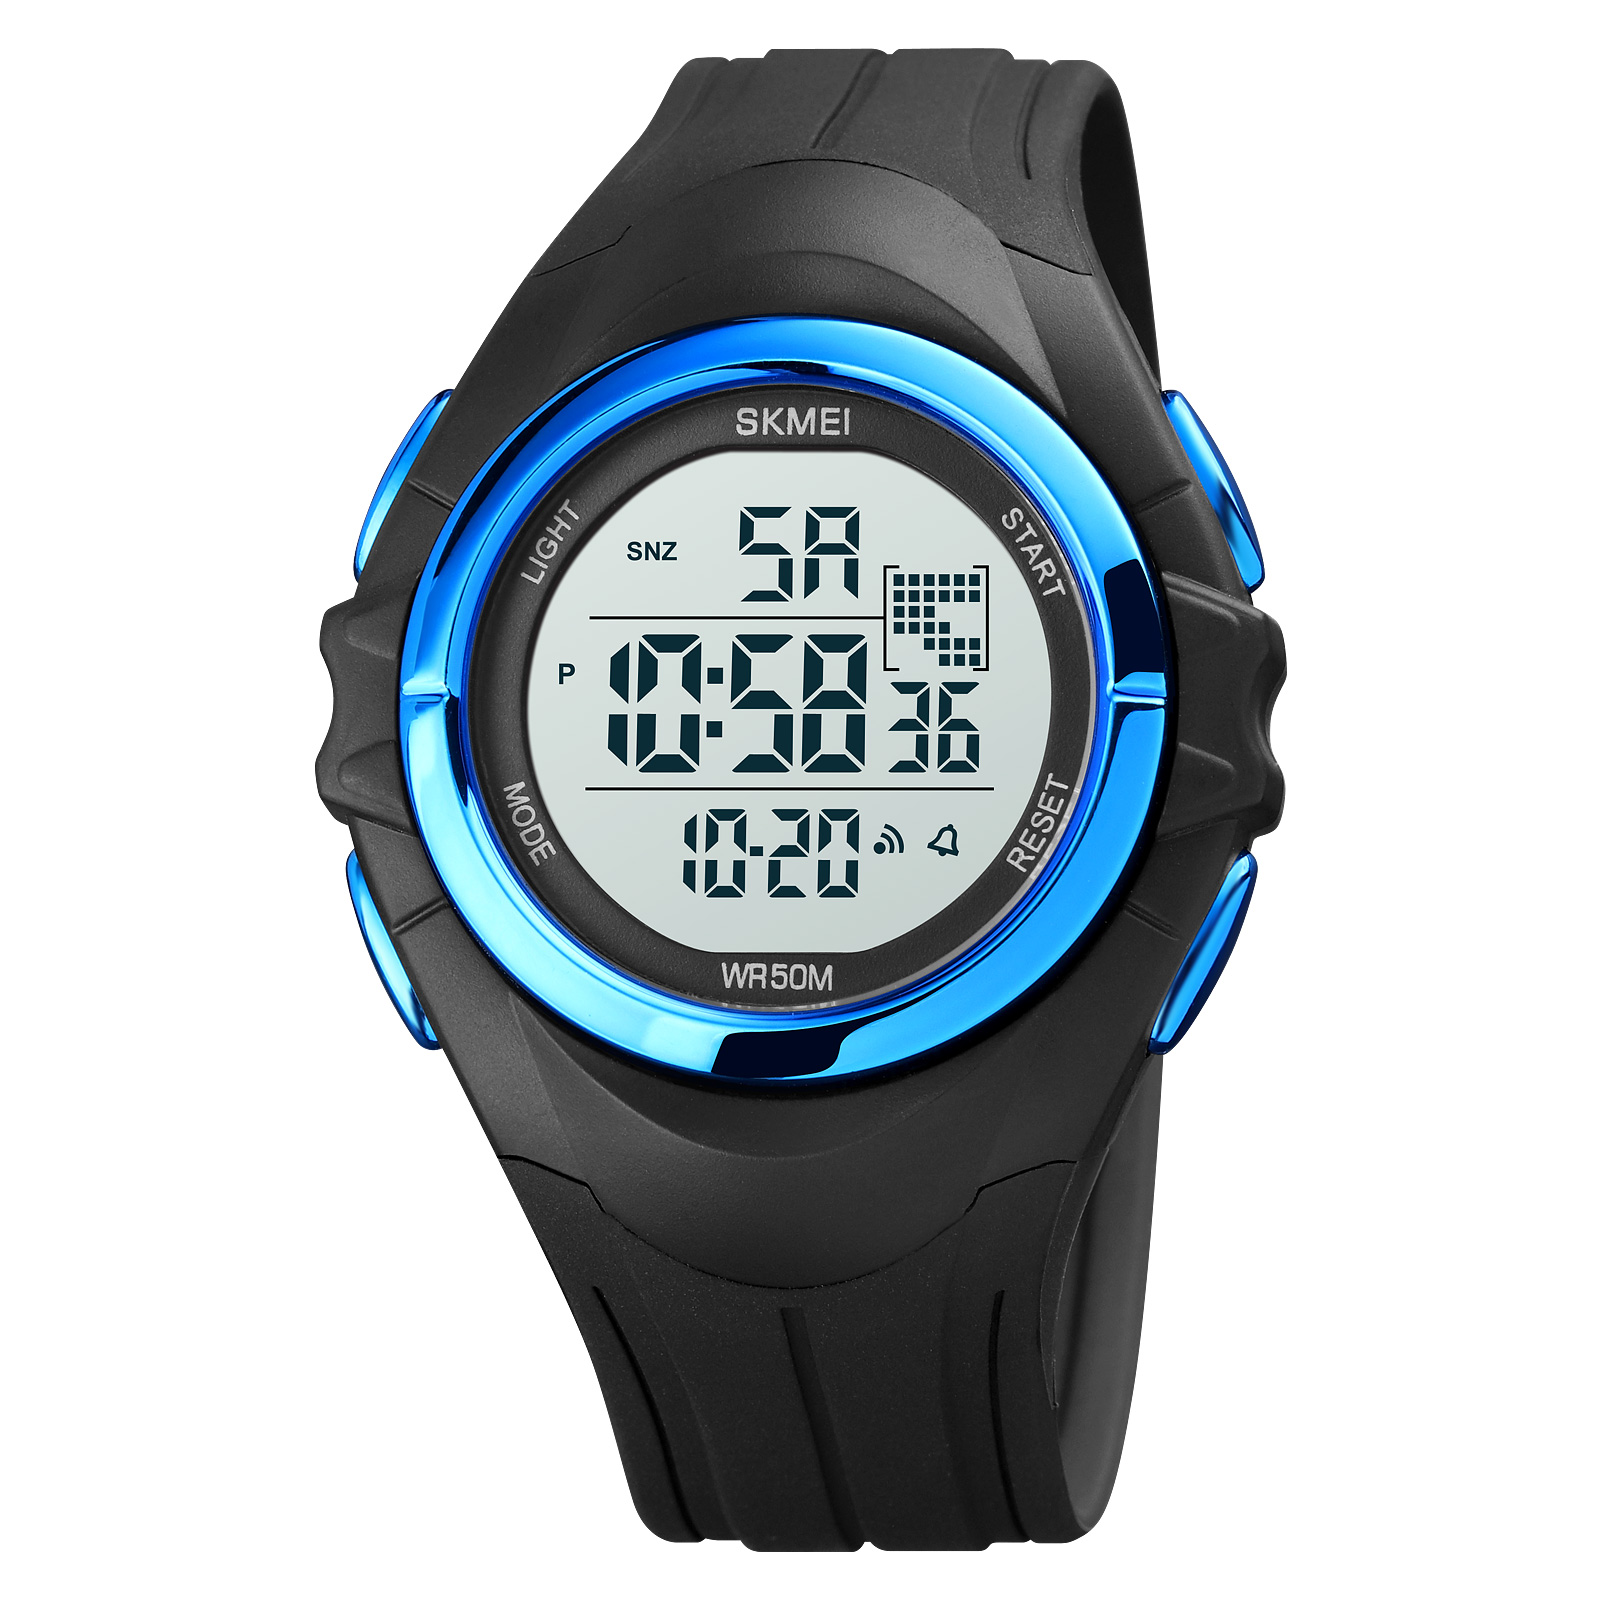 sports watches supplier-Skmei Watch Manufacture Co.,Ltd